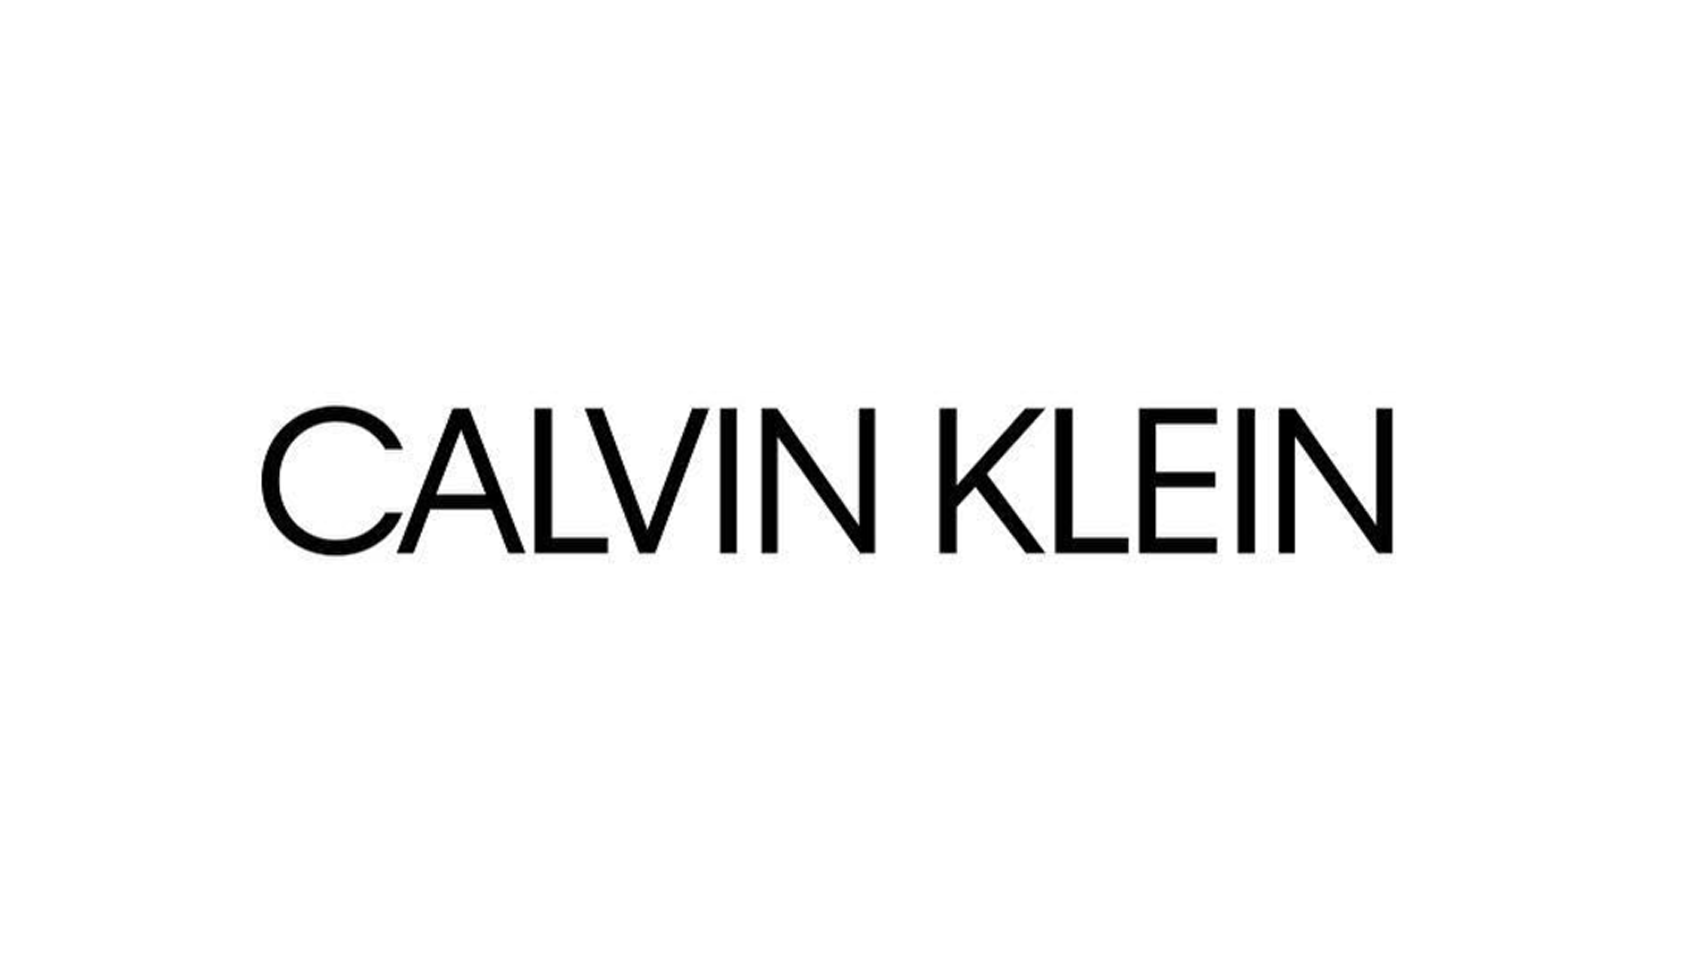 Image result for calvin klein logo